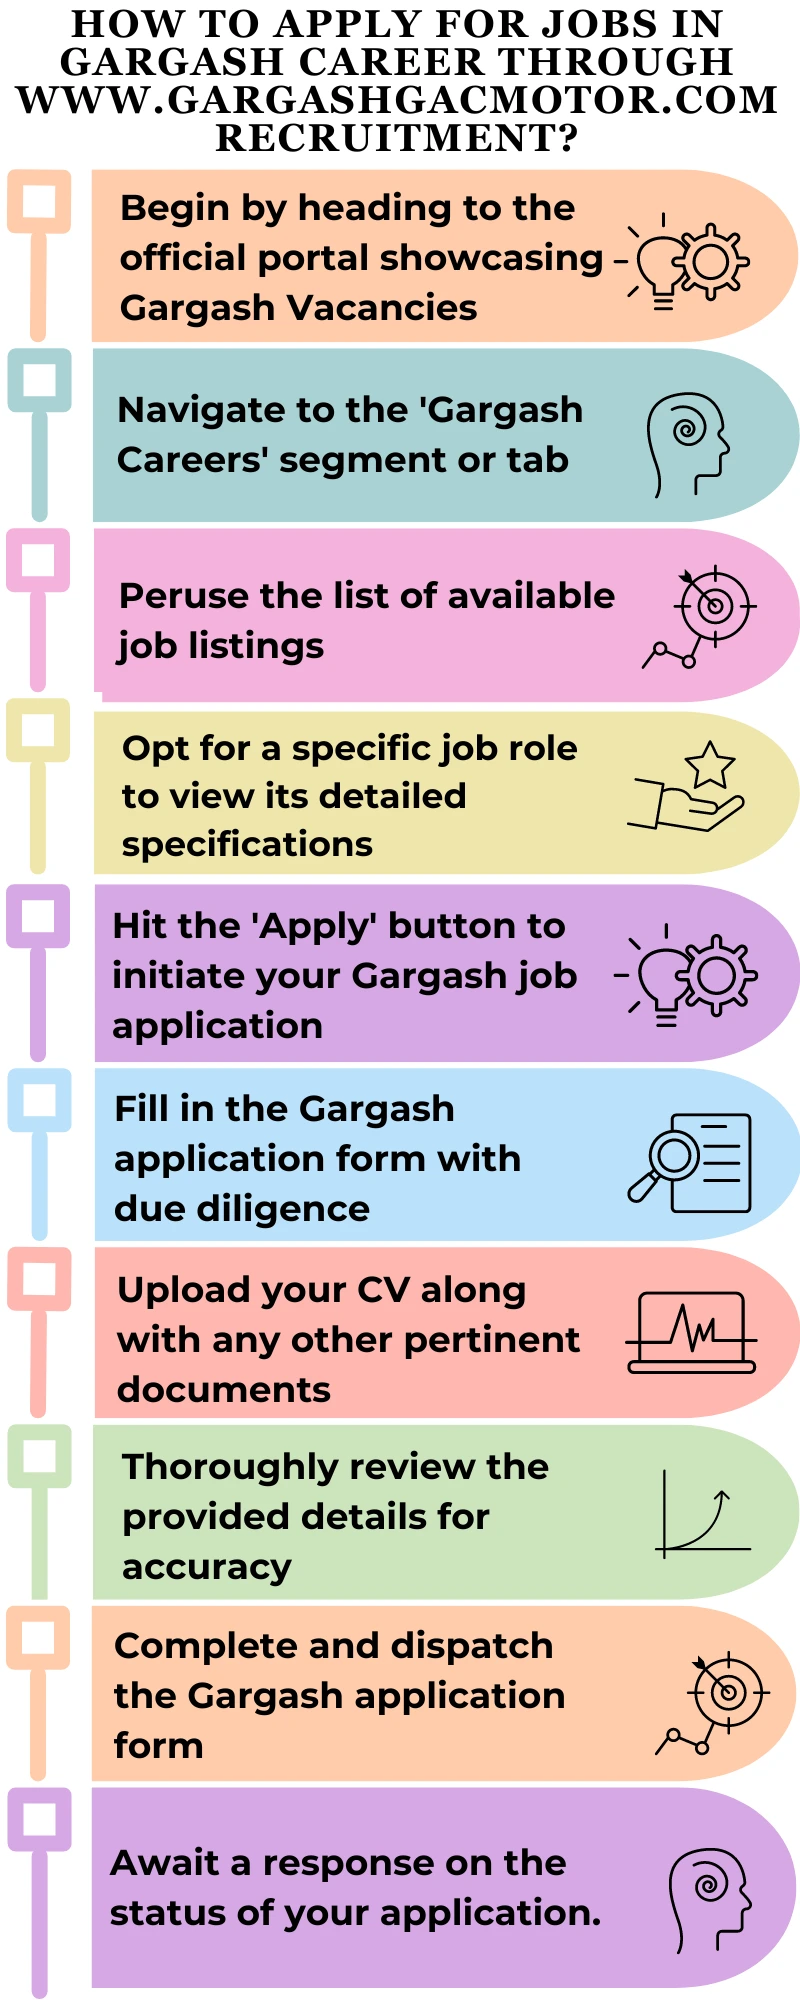 How to Apply for Jobs in Gargash Career through www.gargashgacmotor.com recruitment?